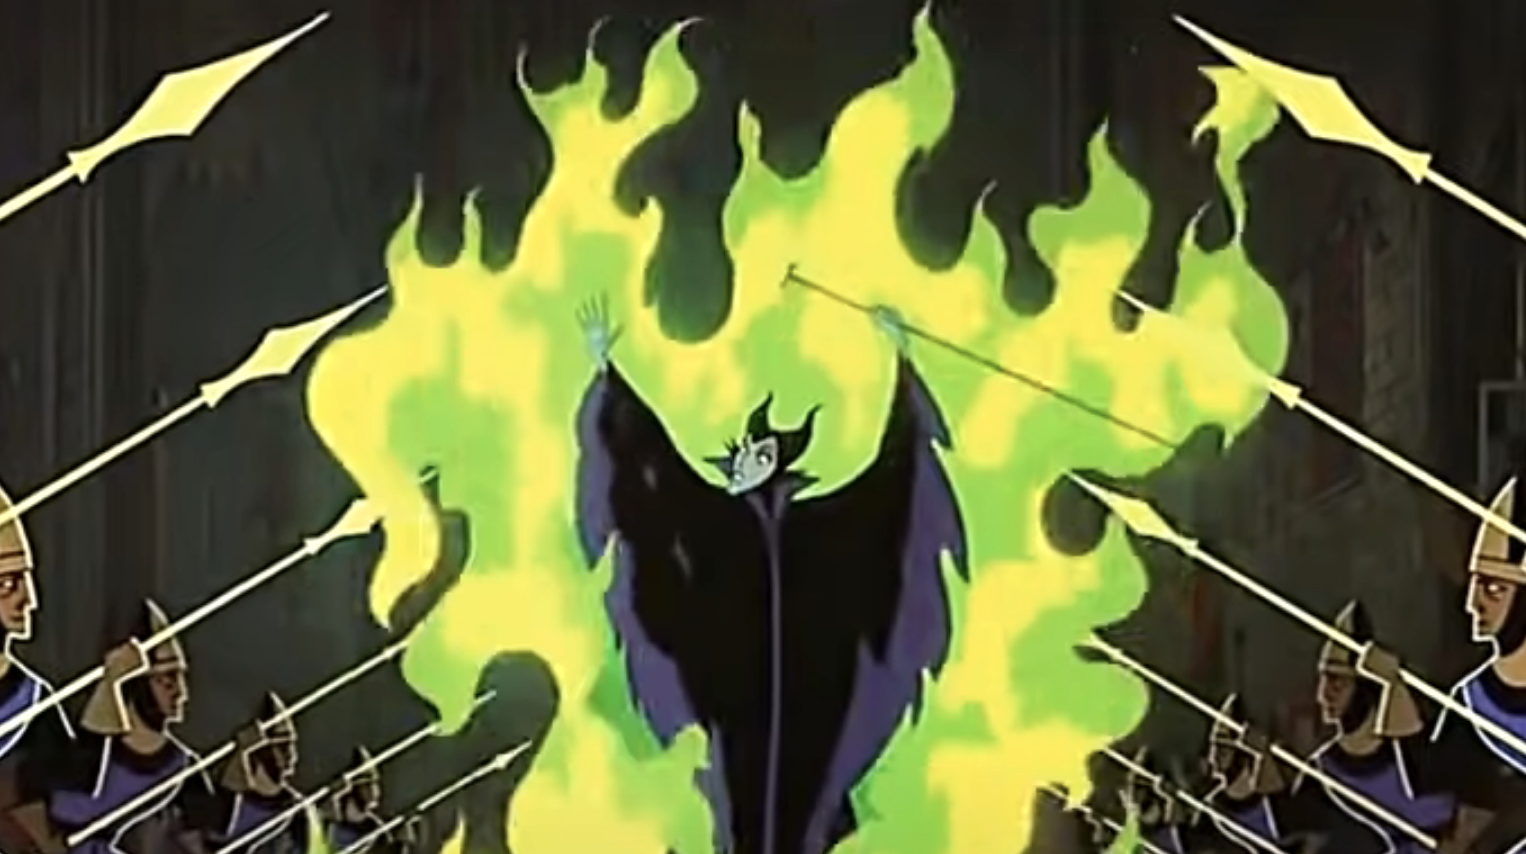 Maleficent casting spells